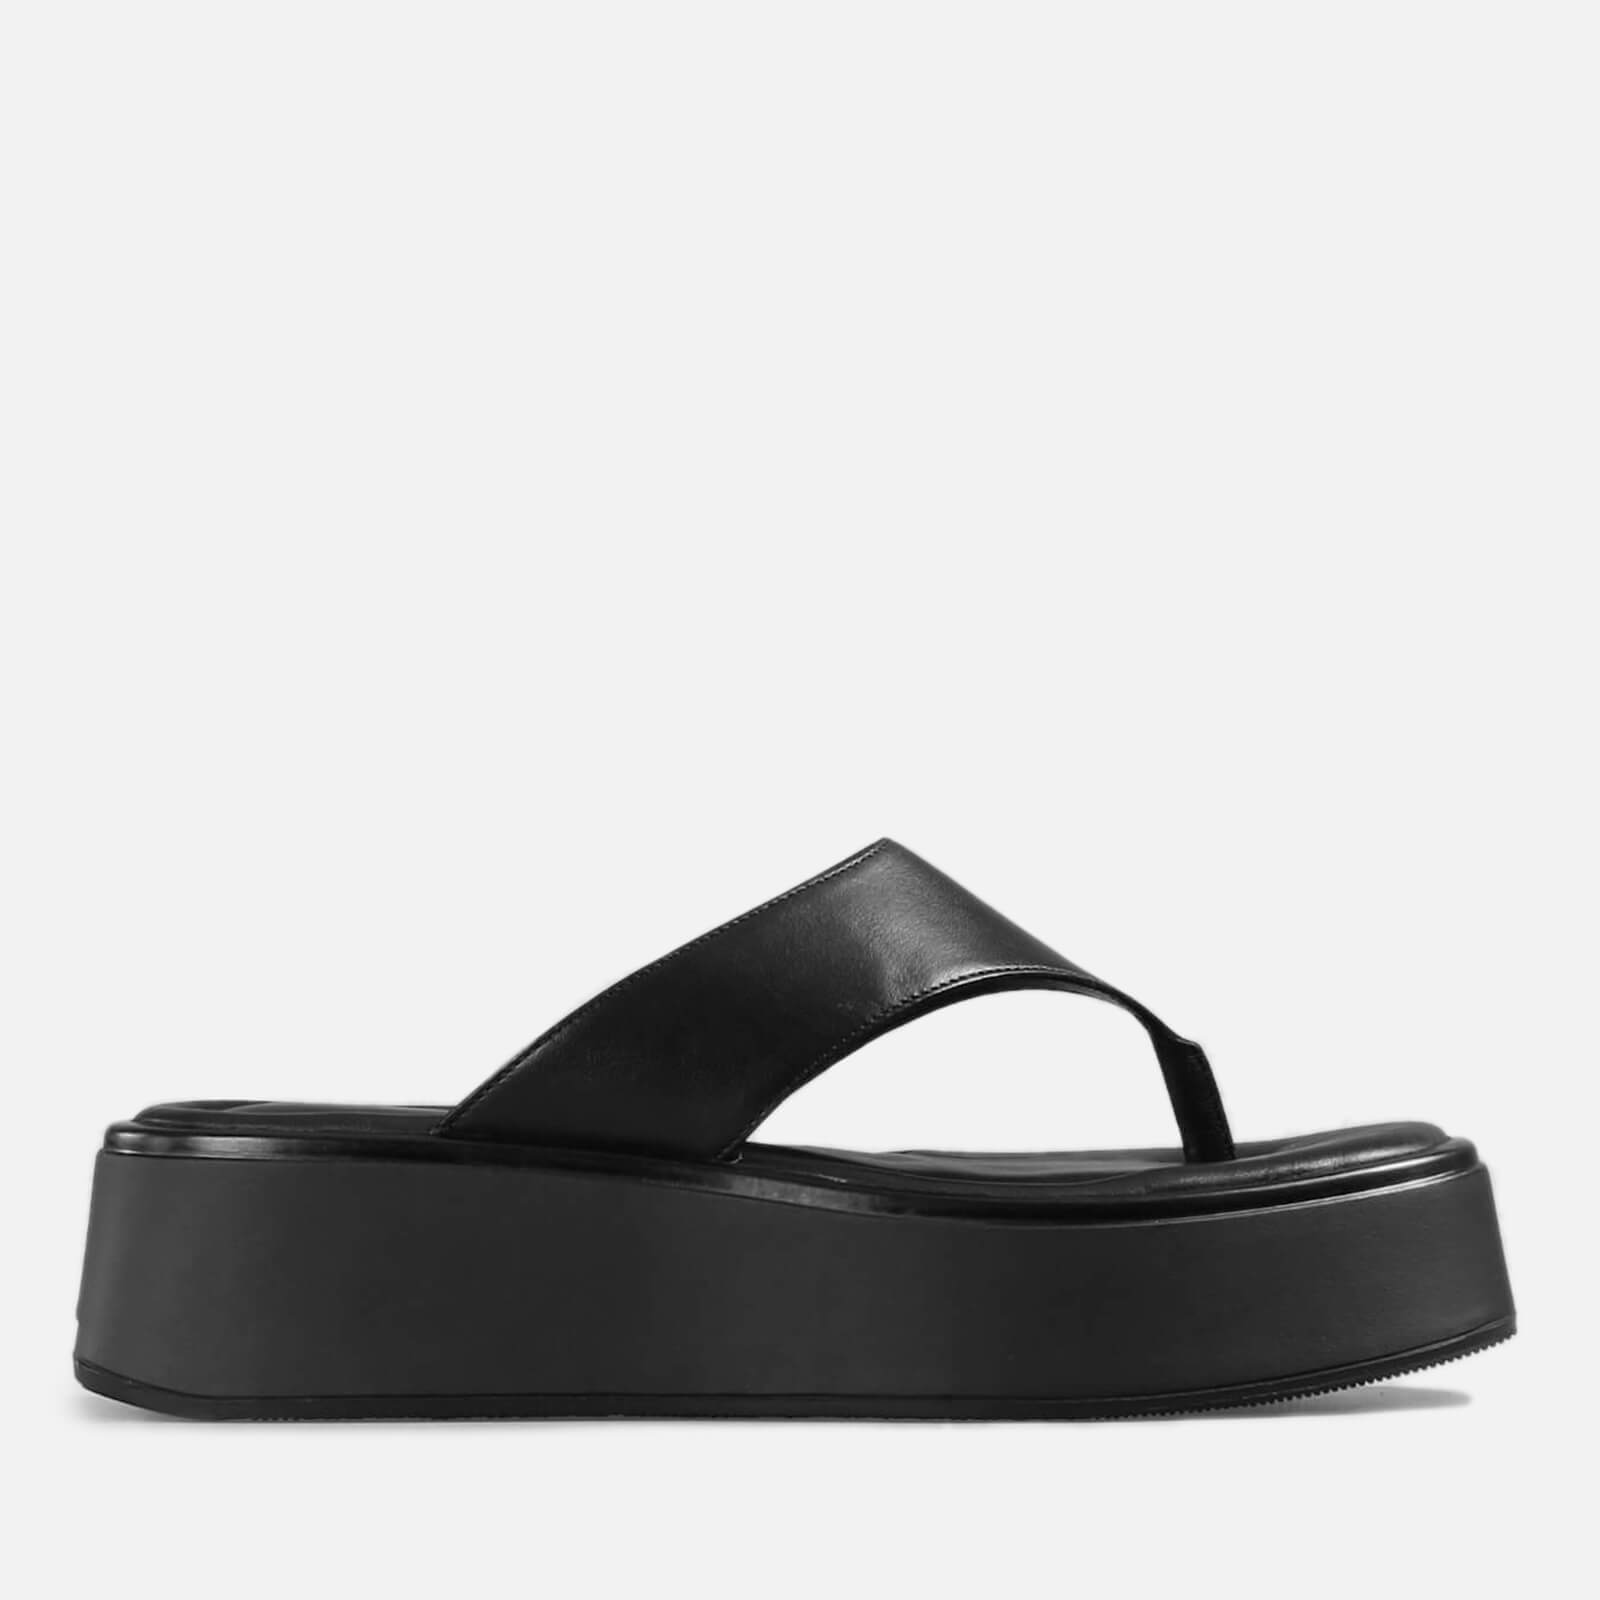 vagabond womens courtney leather toe post sandals - black/black - uk 8 schwarz